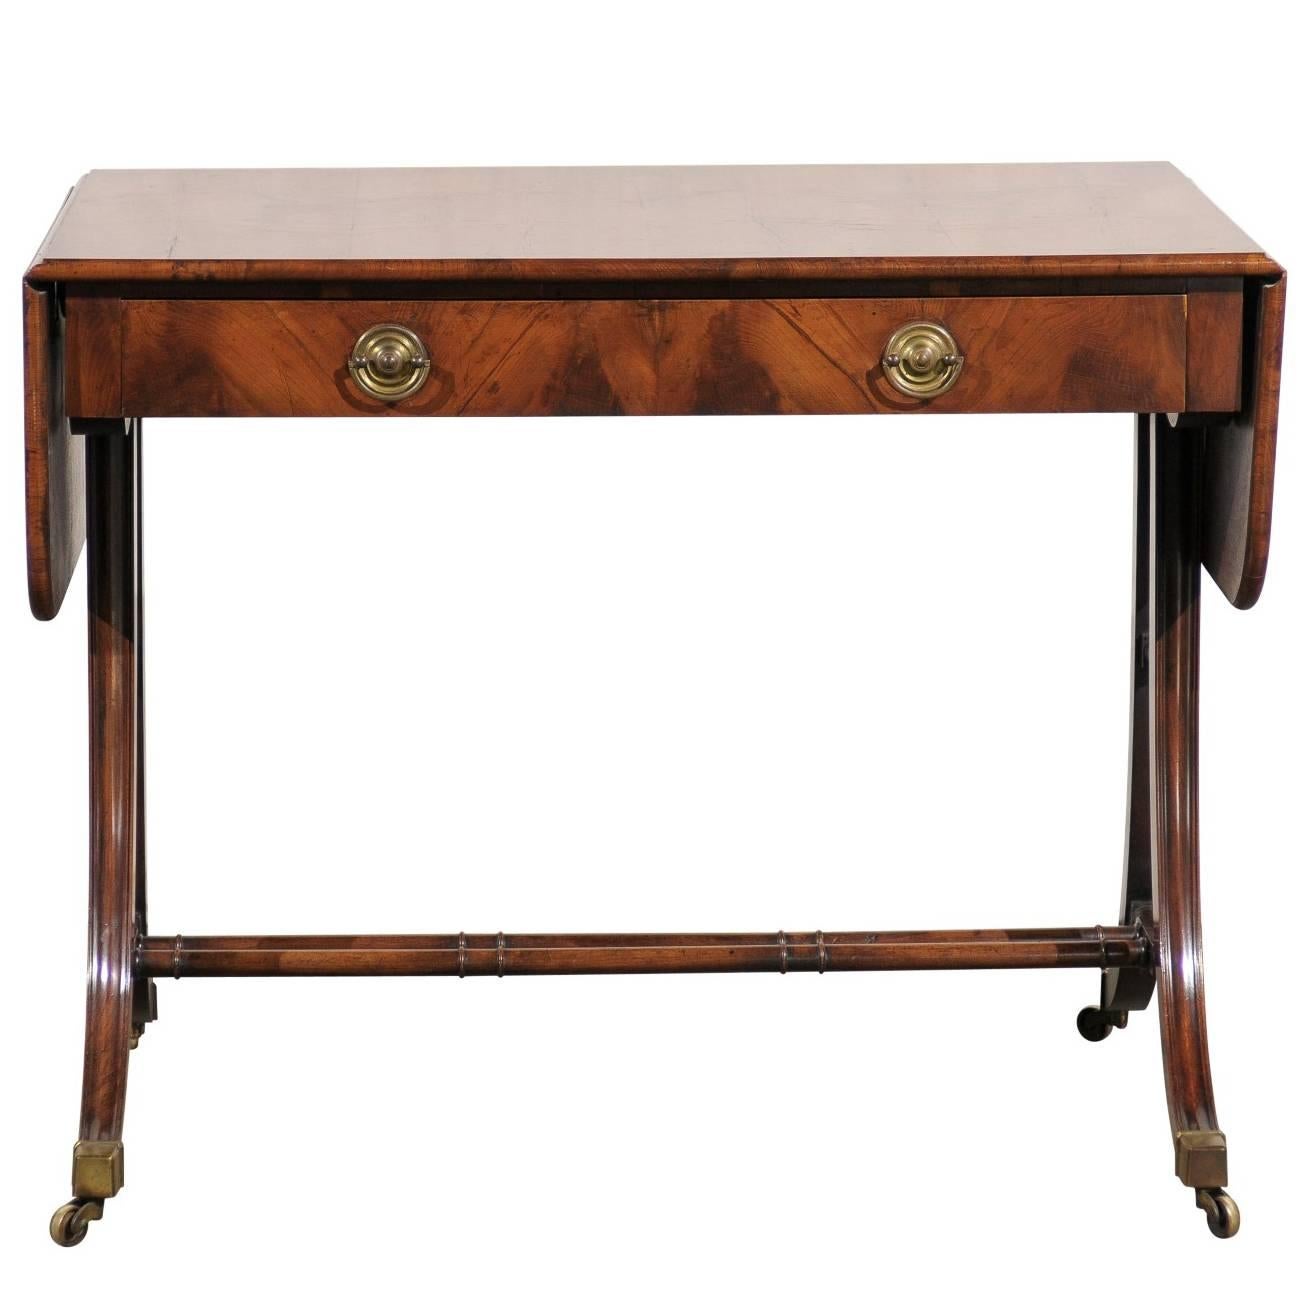 19th Century English Regency Style Burled Oyster Veneer Sofa Table